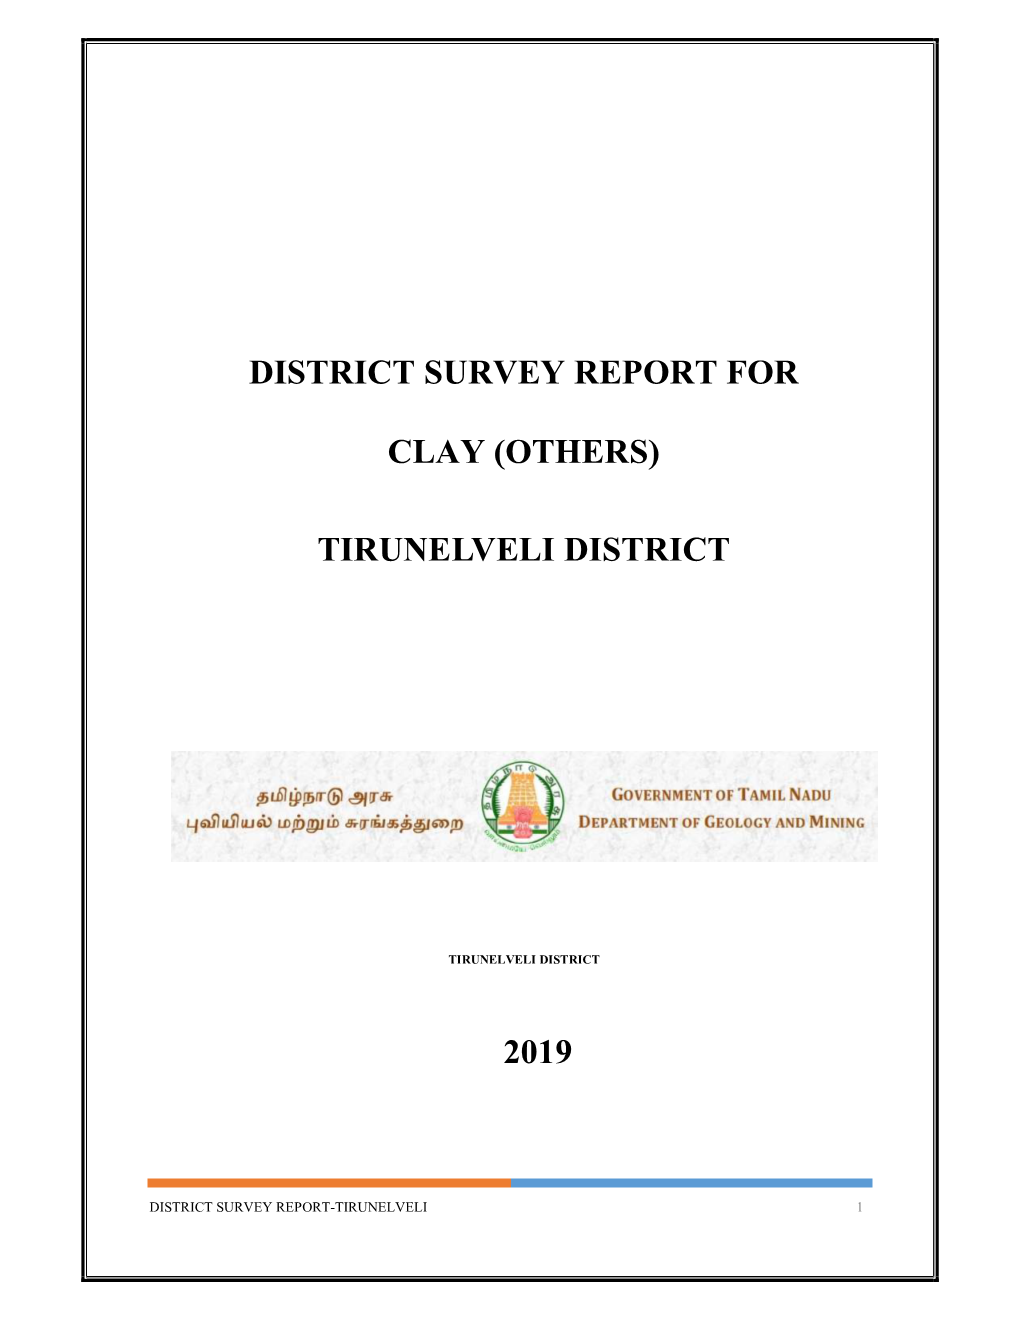 Tirunelveli District 2019